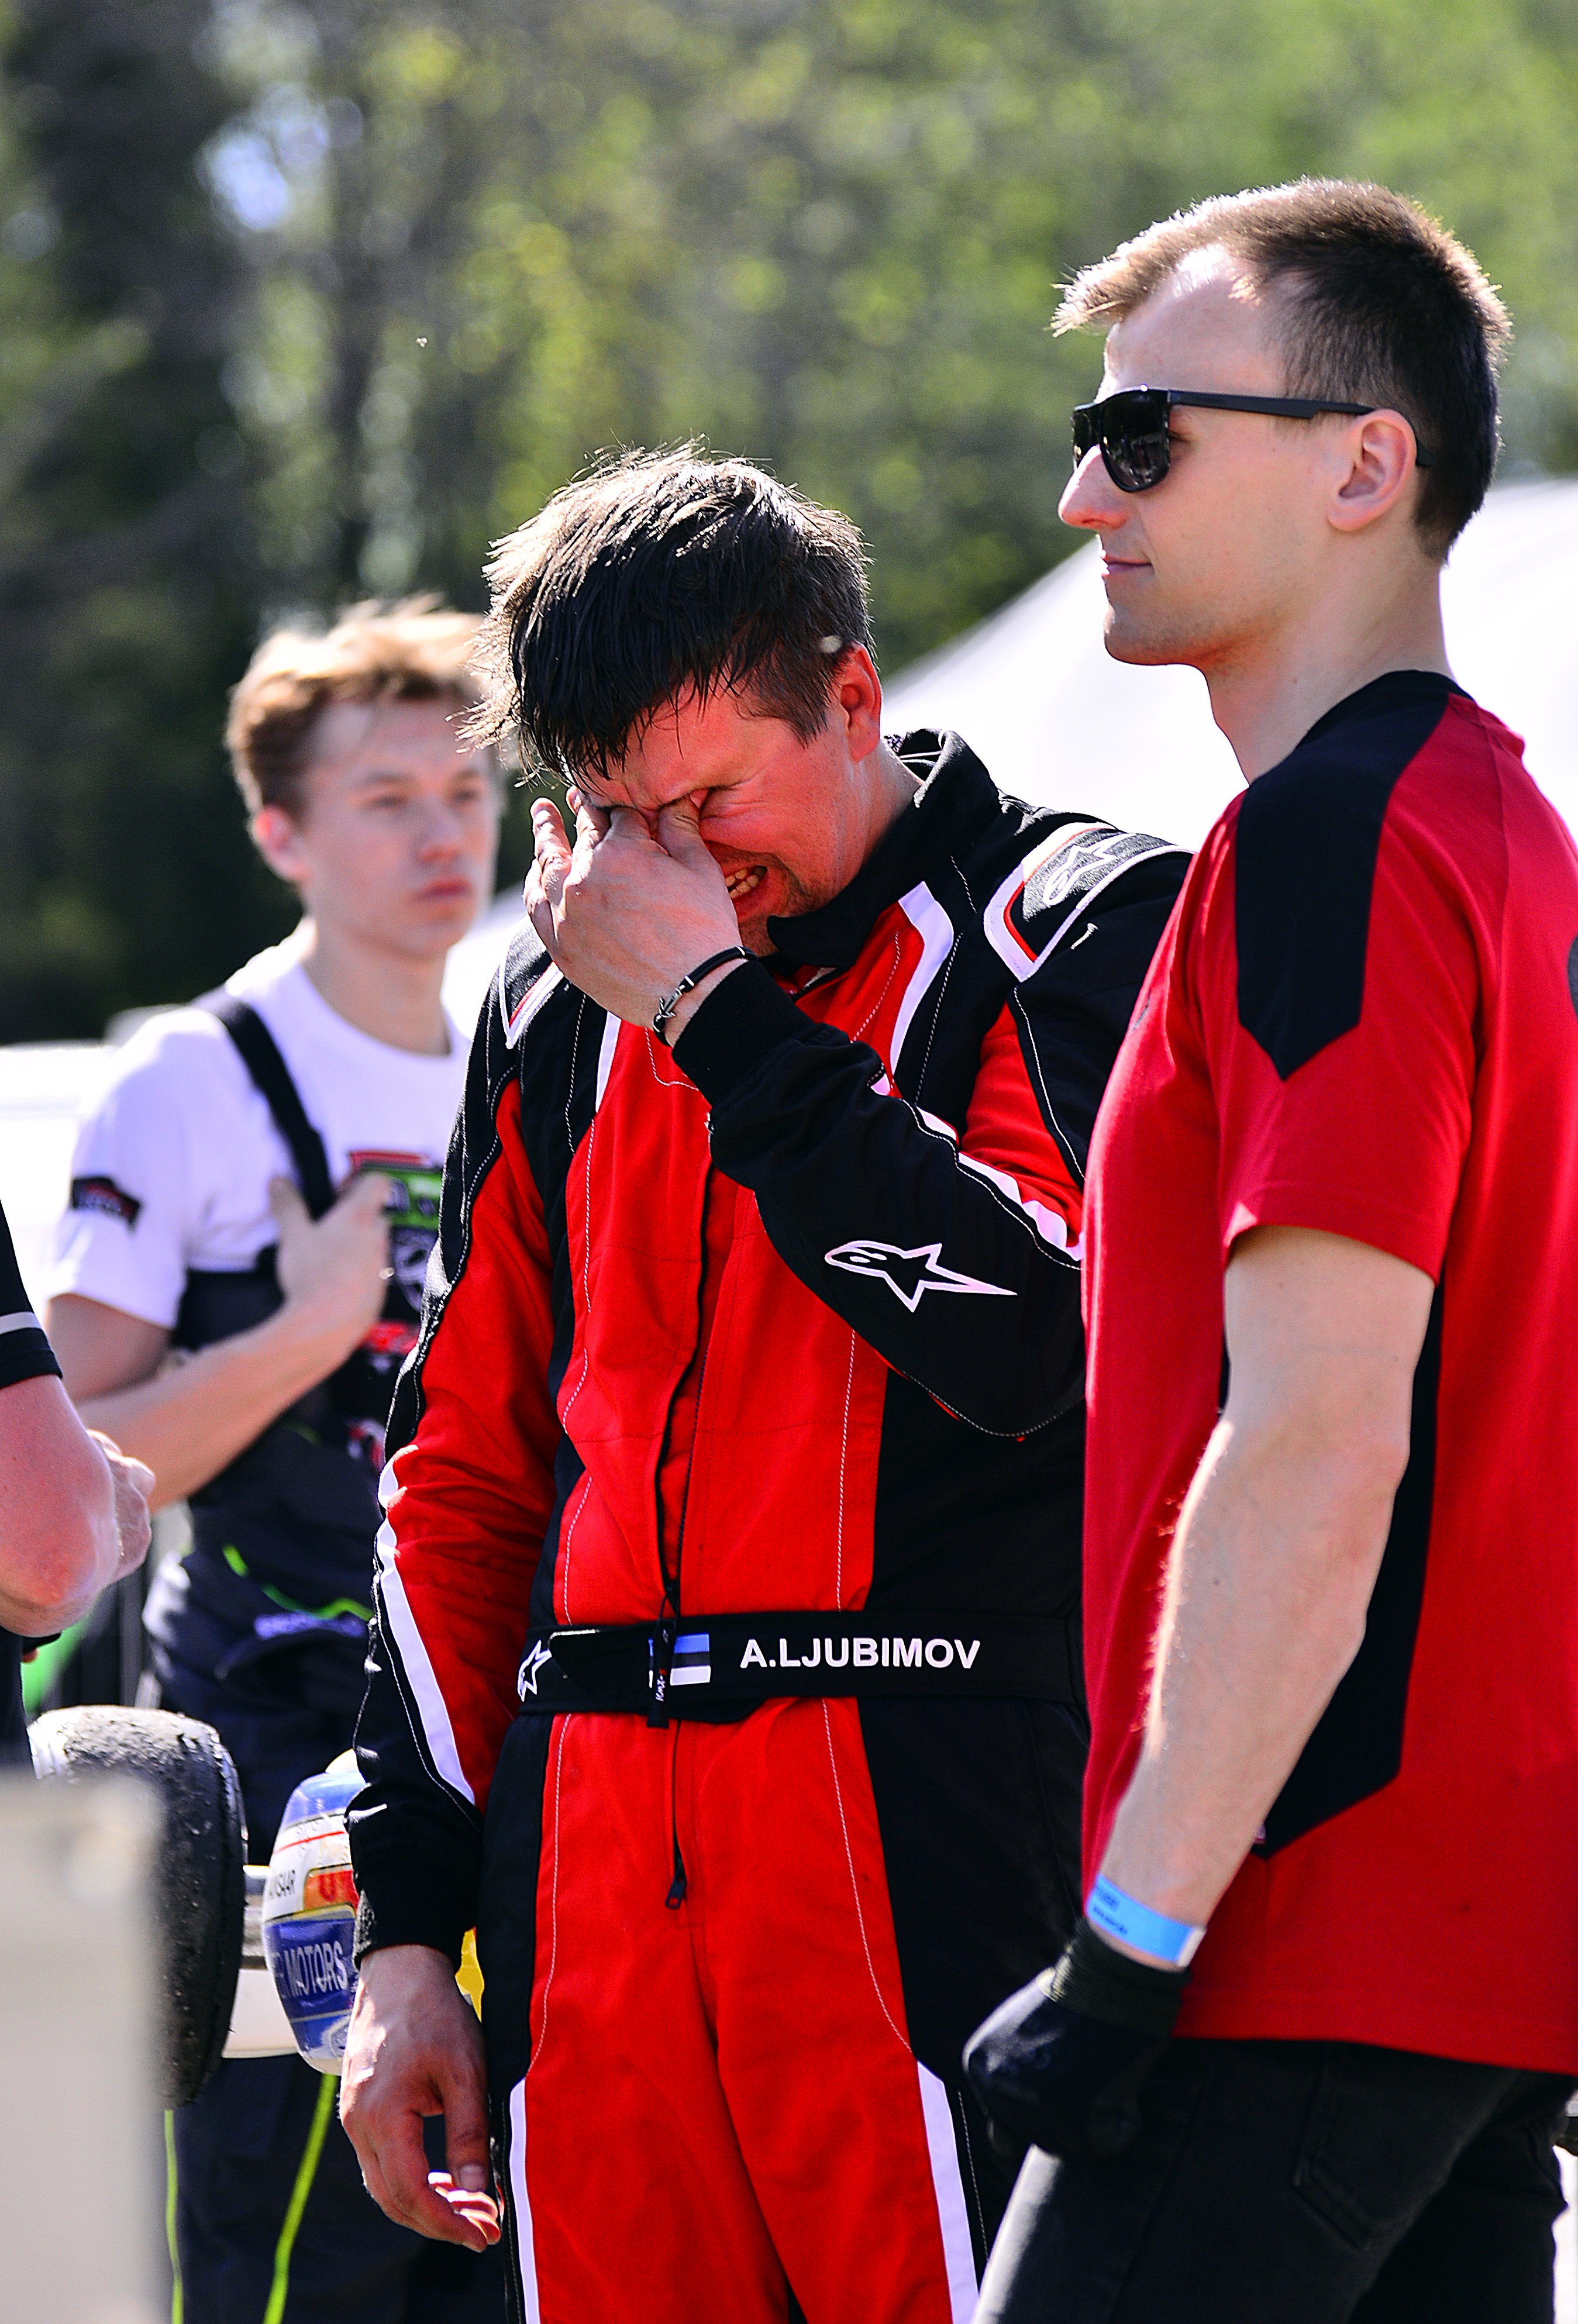 ags_racing_team_alexander_ljubimov